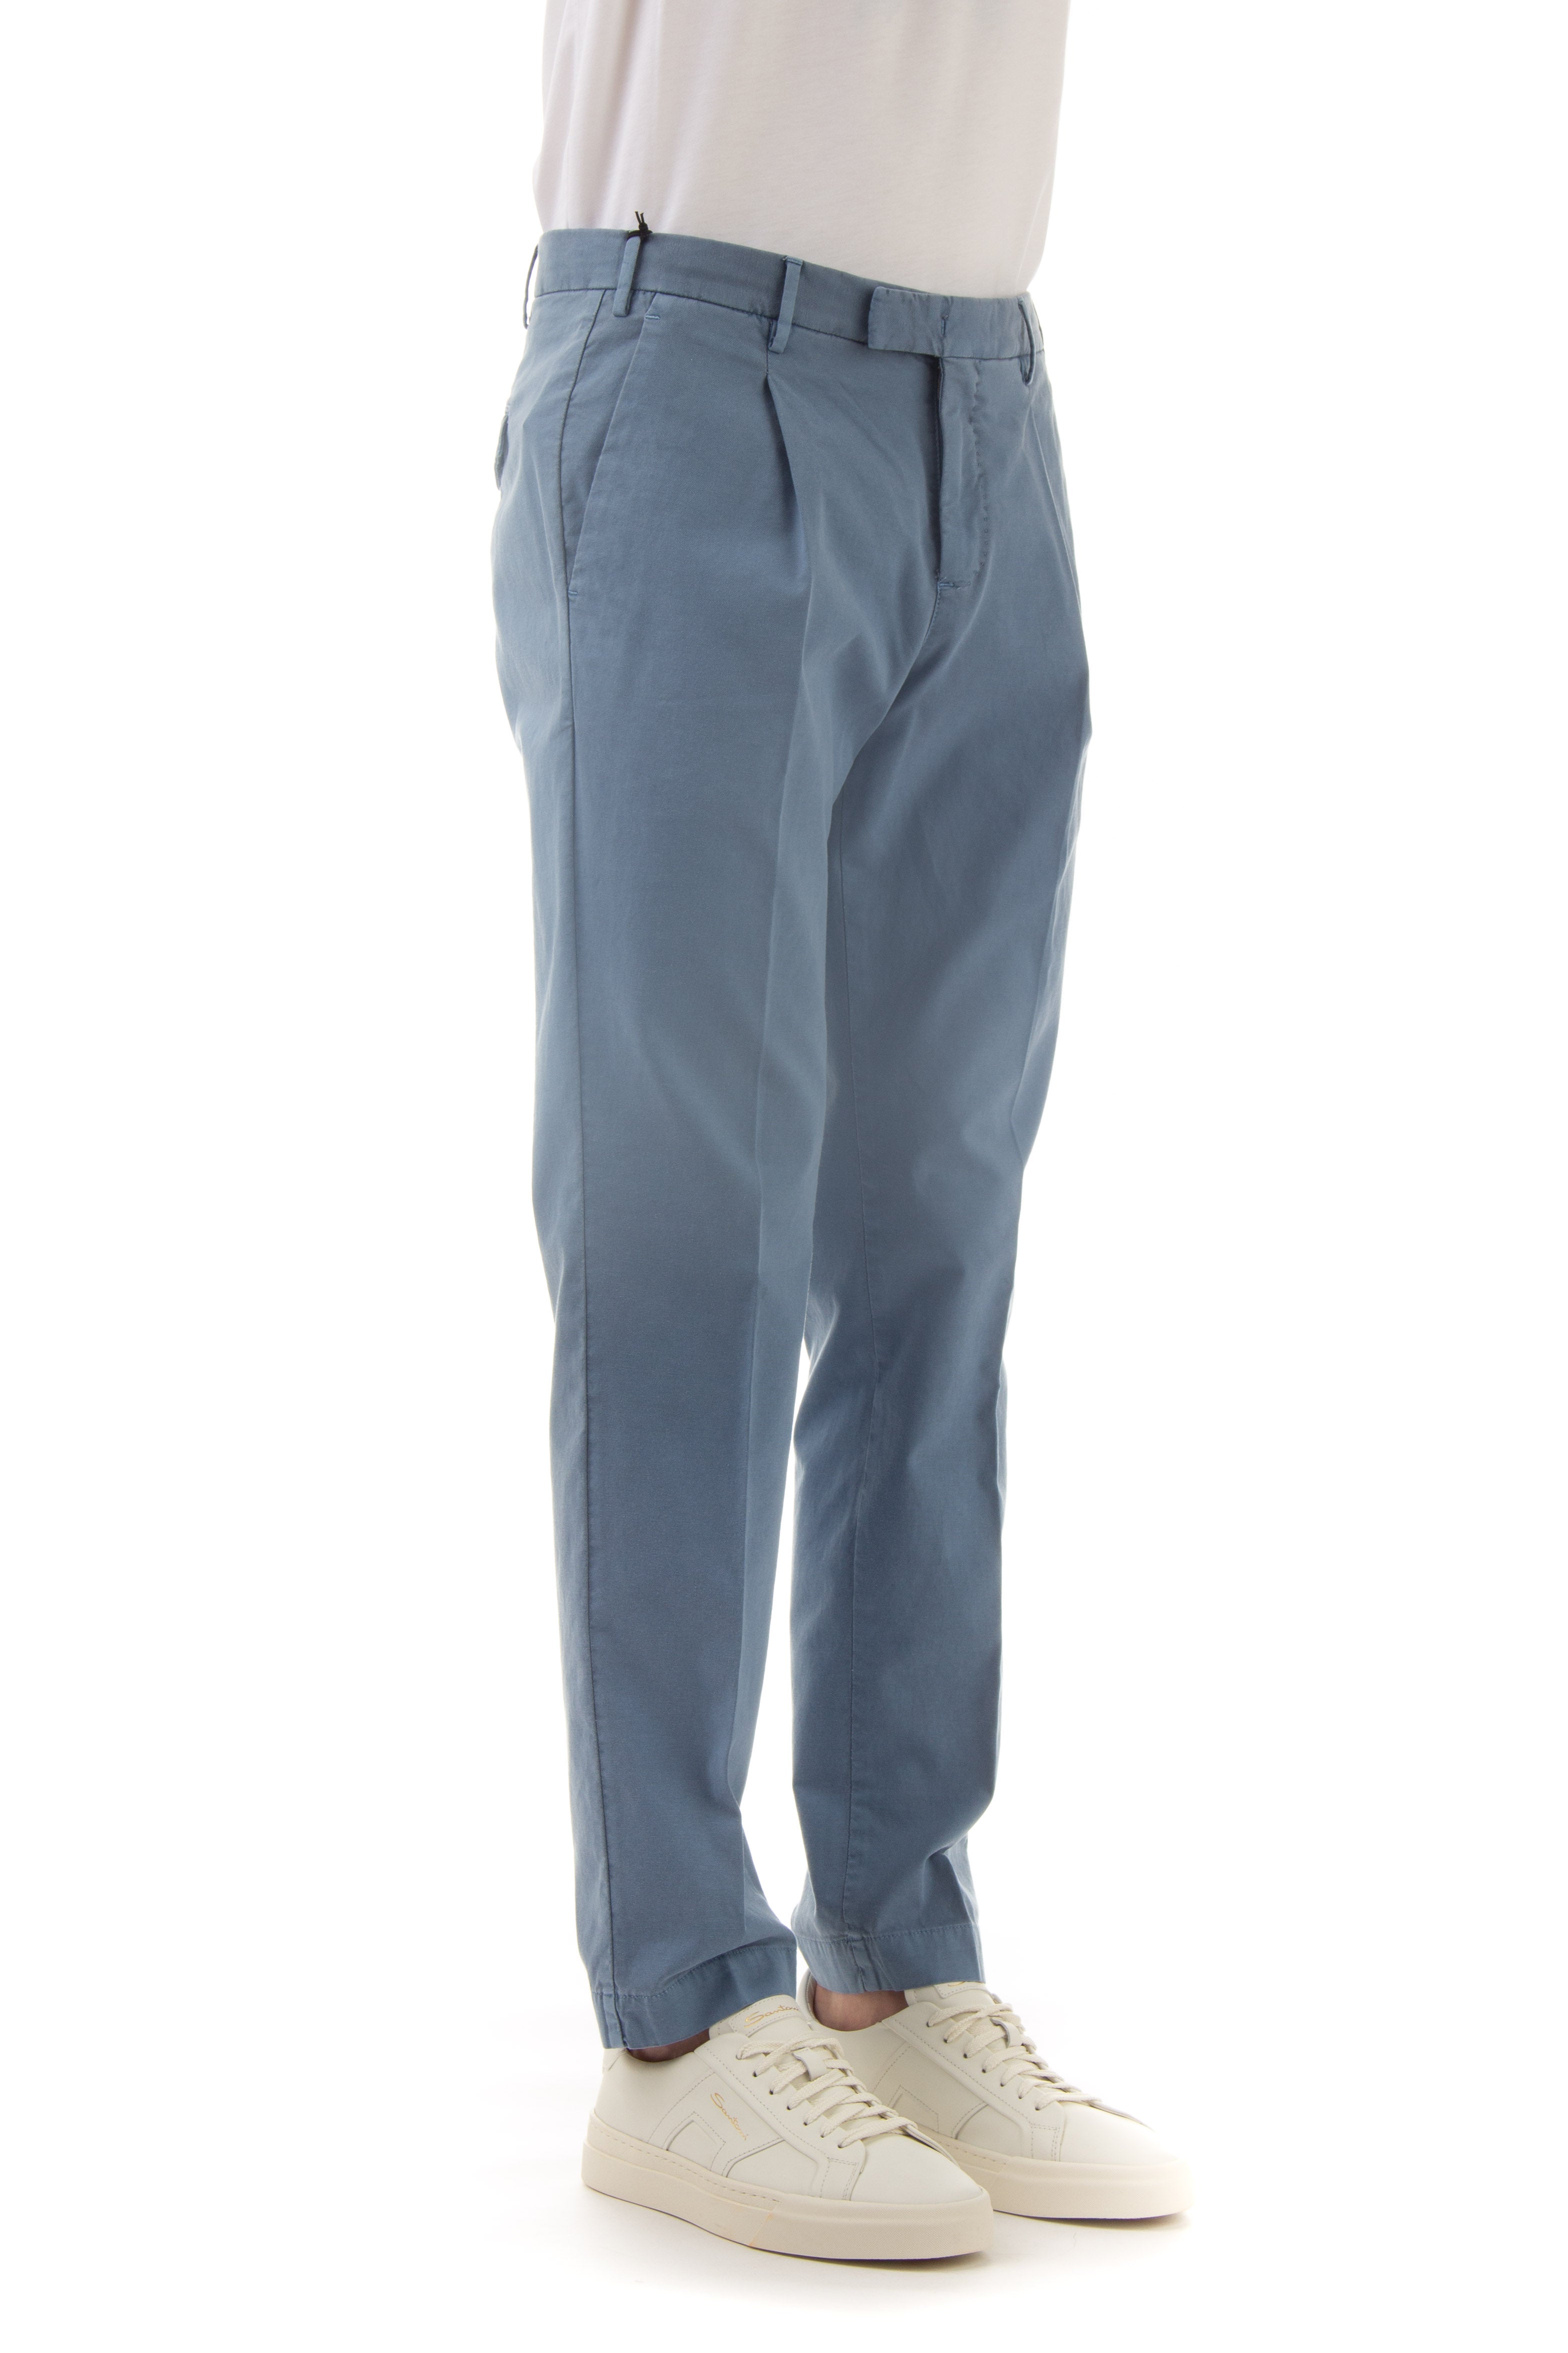 Pantalone in cotone delave' stretch master fit